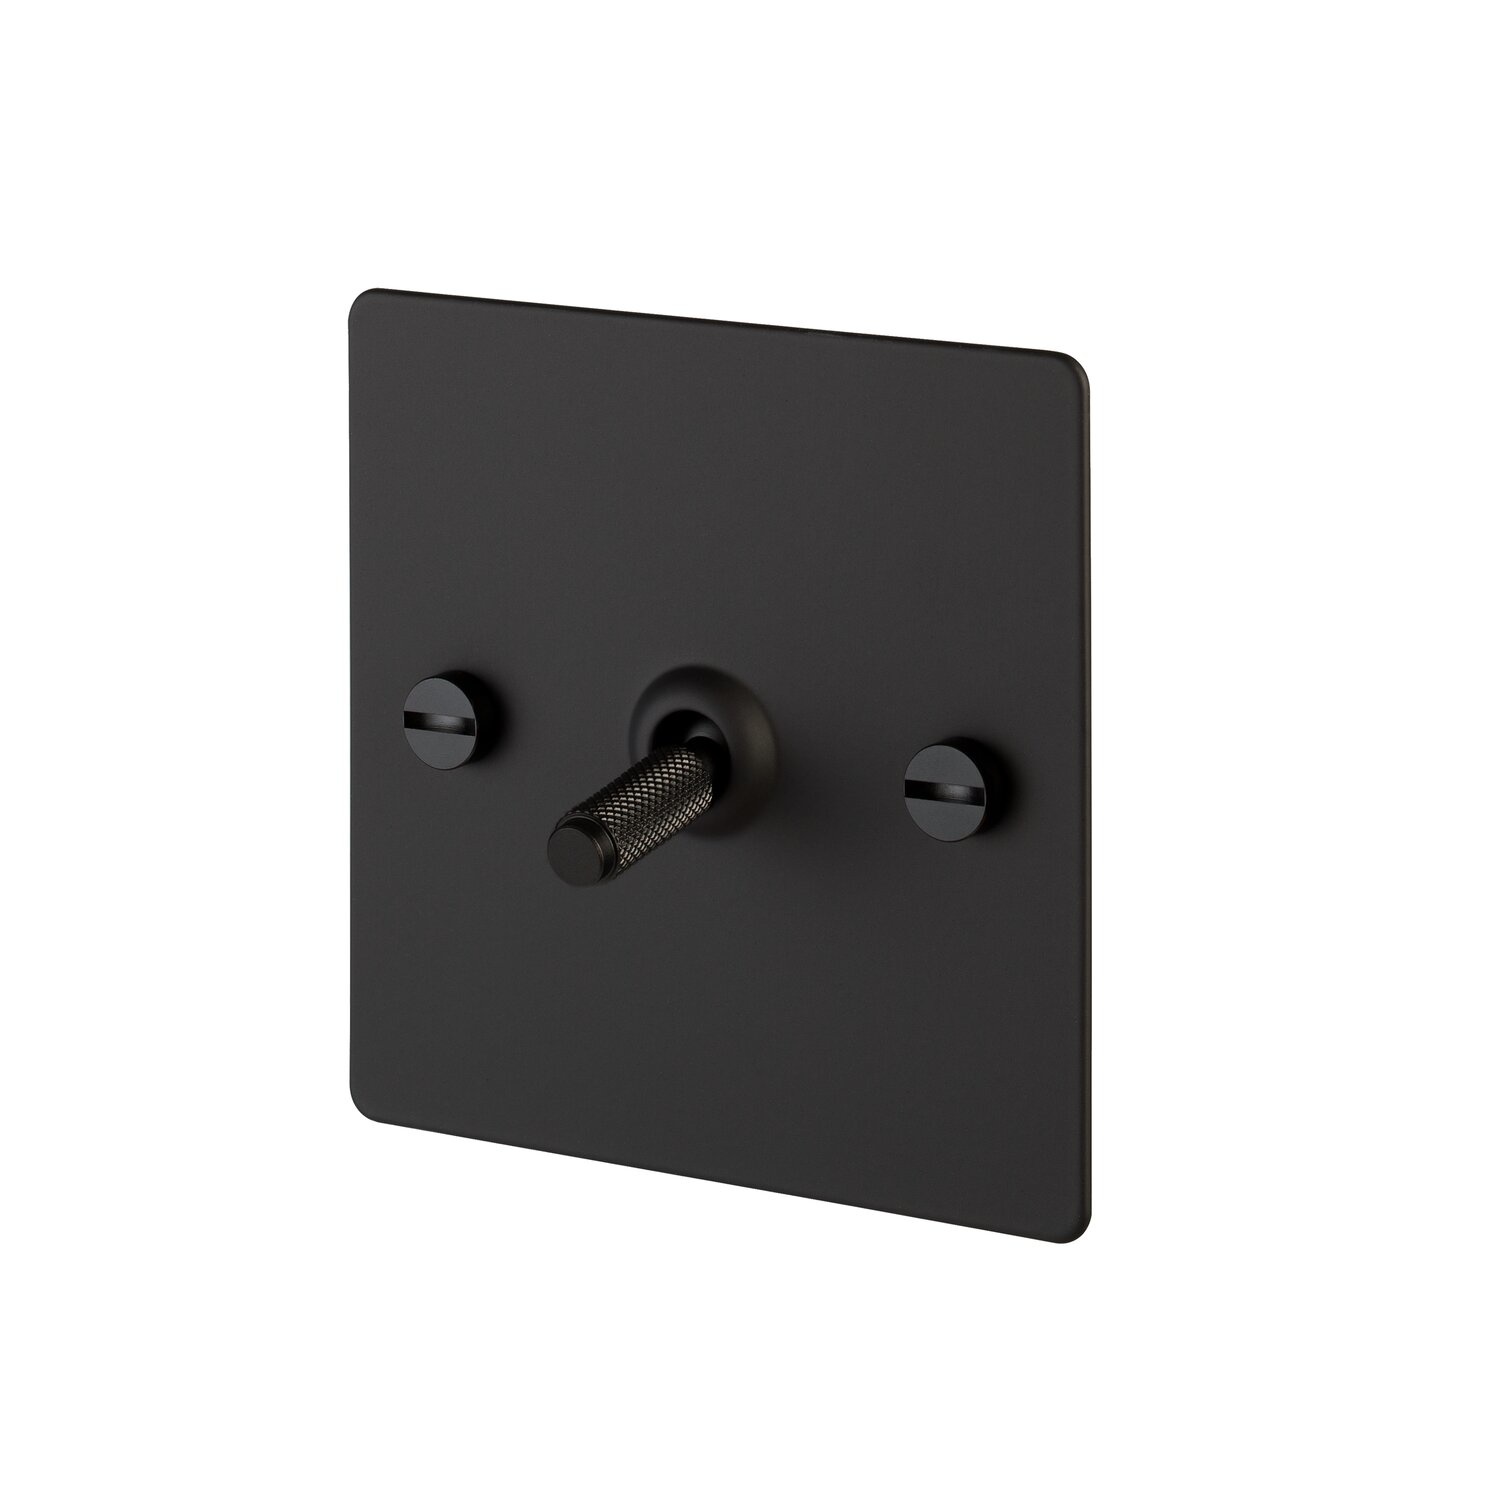 Interrupteur design toggle switch haut de gamme finition Noir Mat